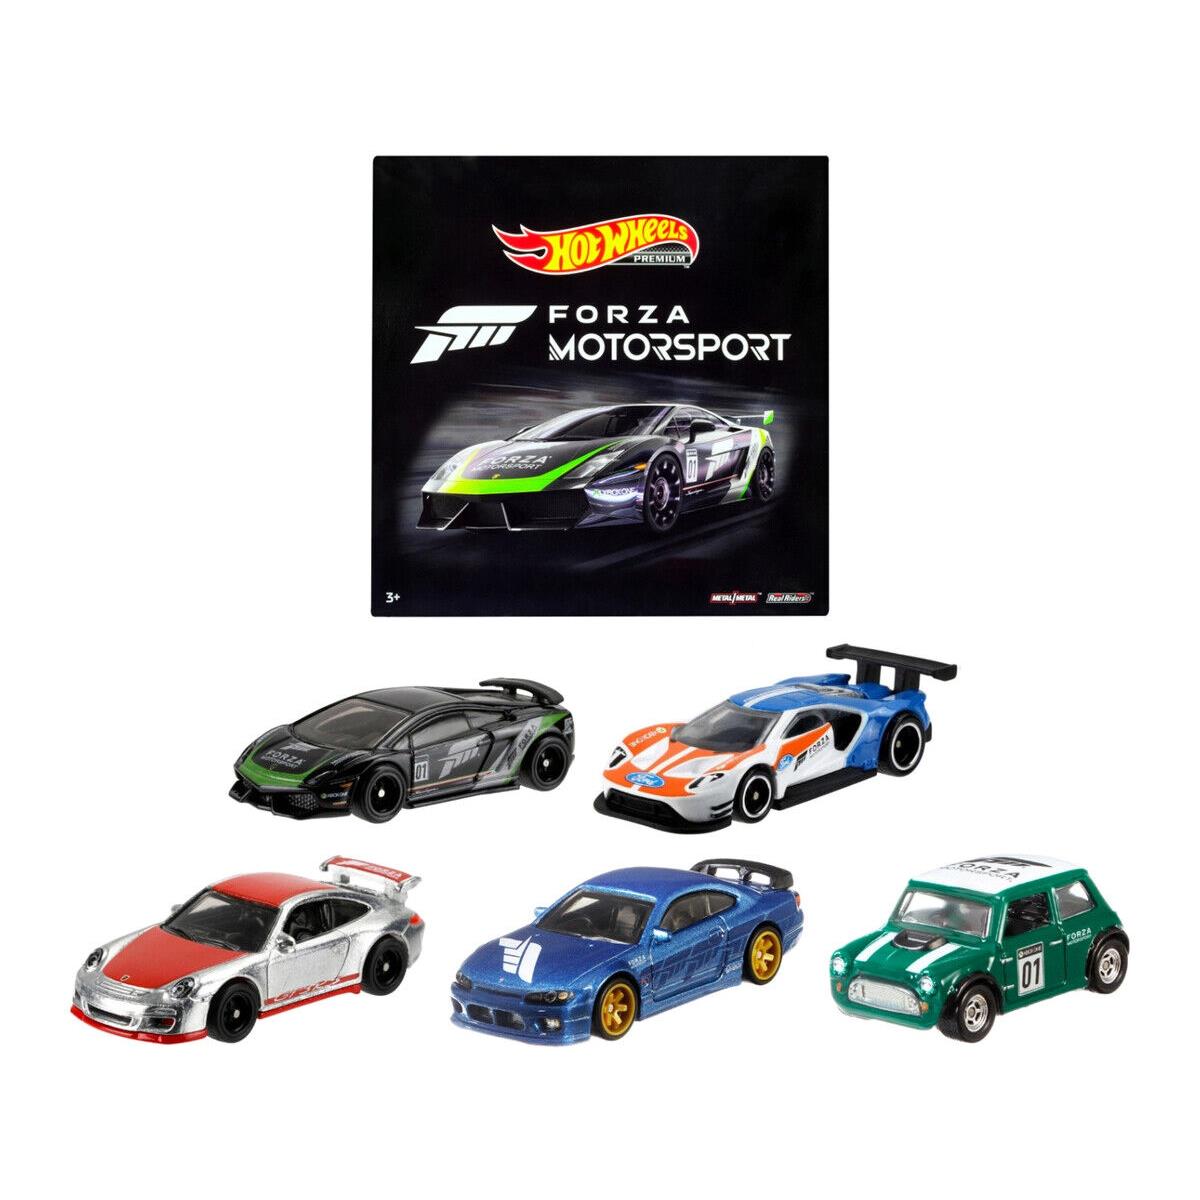 Forza Motorsport 5 Piece Set Diecast Model Cars by Hot Wheels